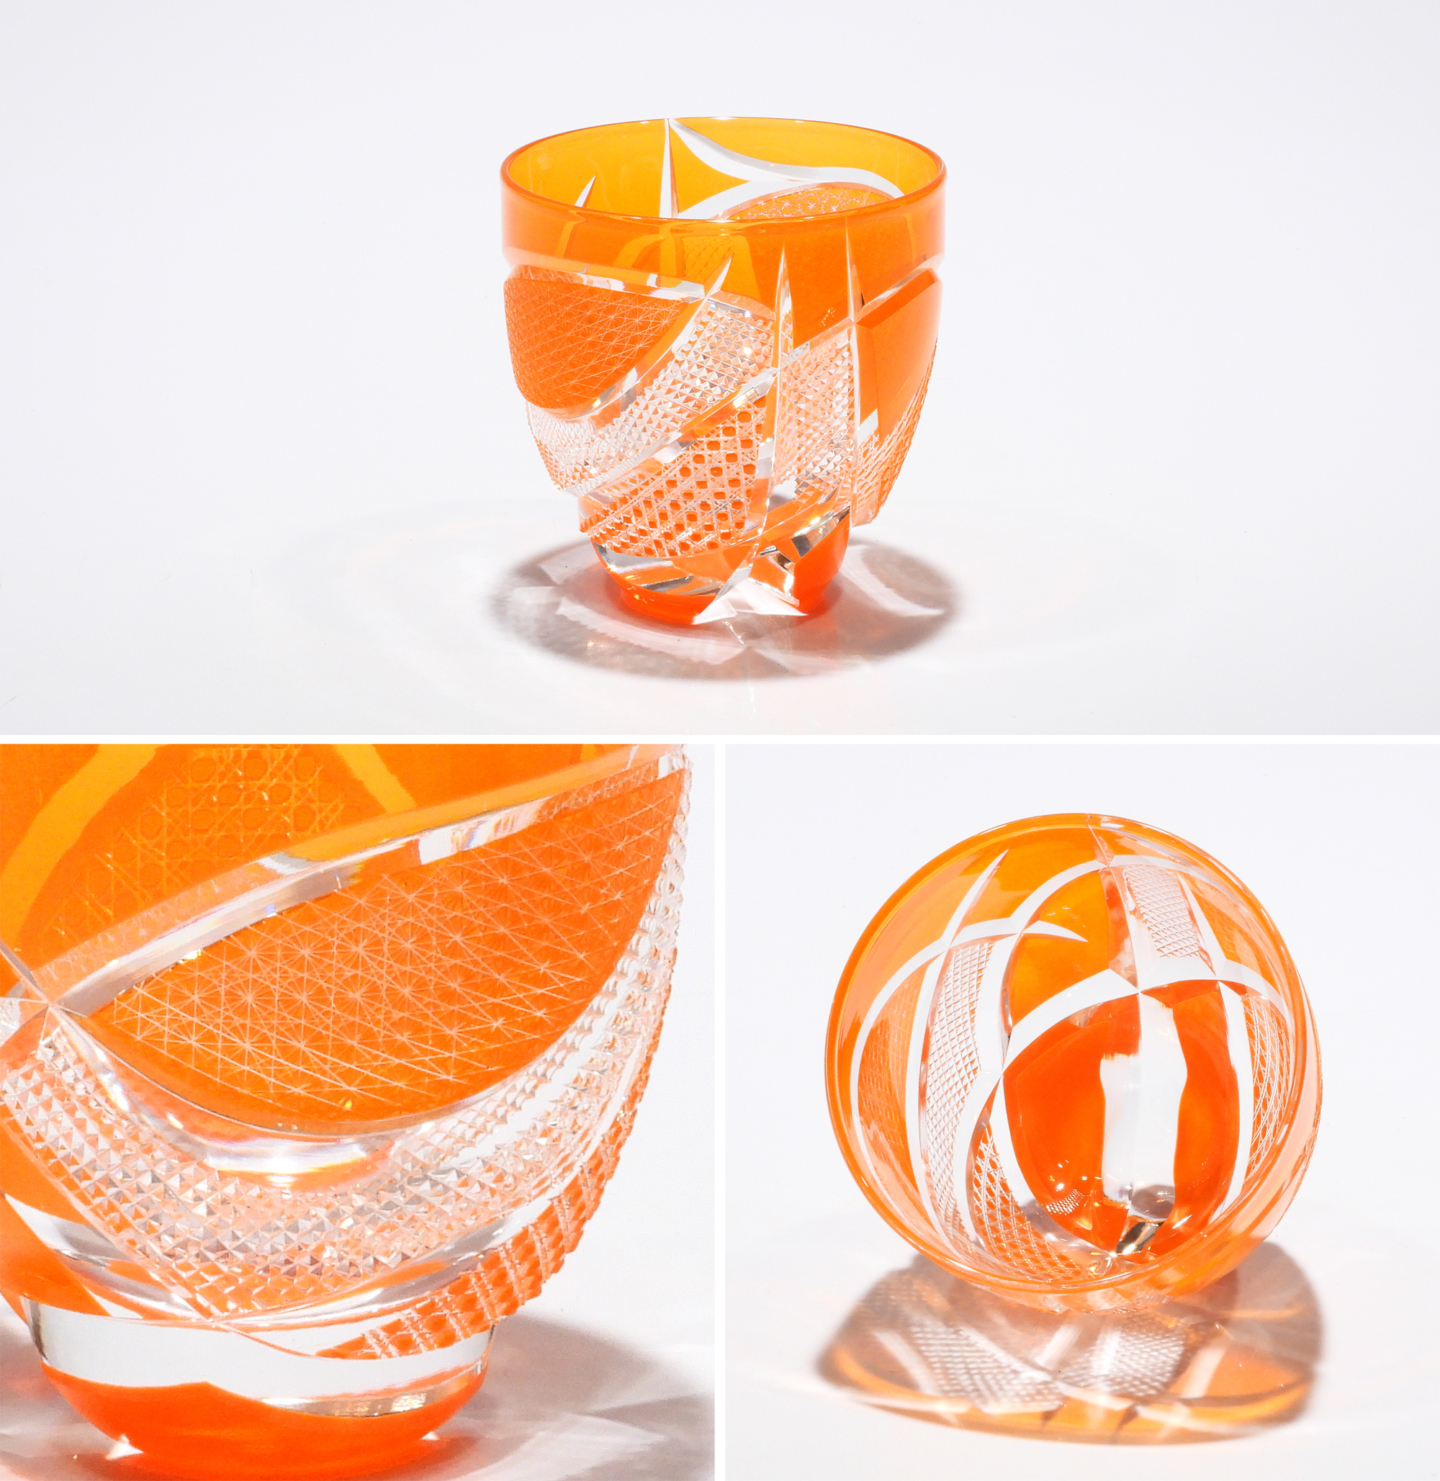 [Hanashyo]Online Edo Kiriko glassware store, where the perfect gift selection awaits.